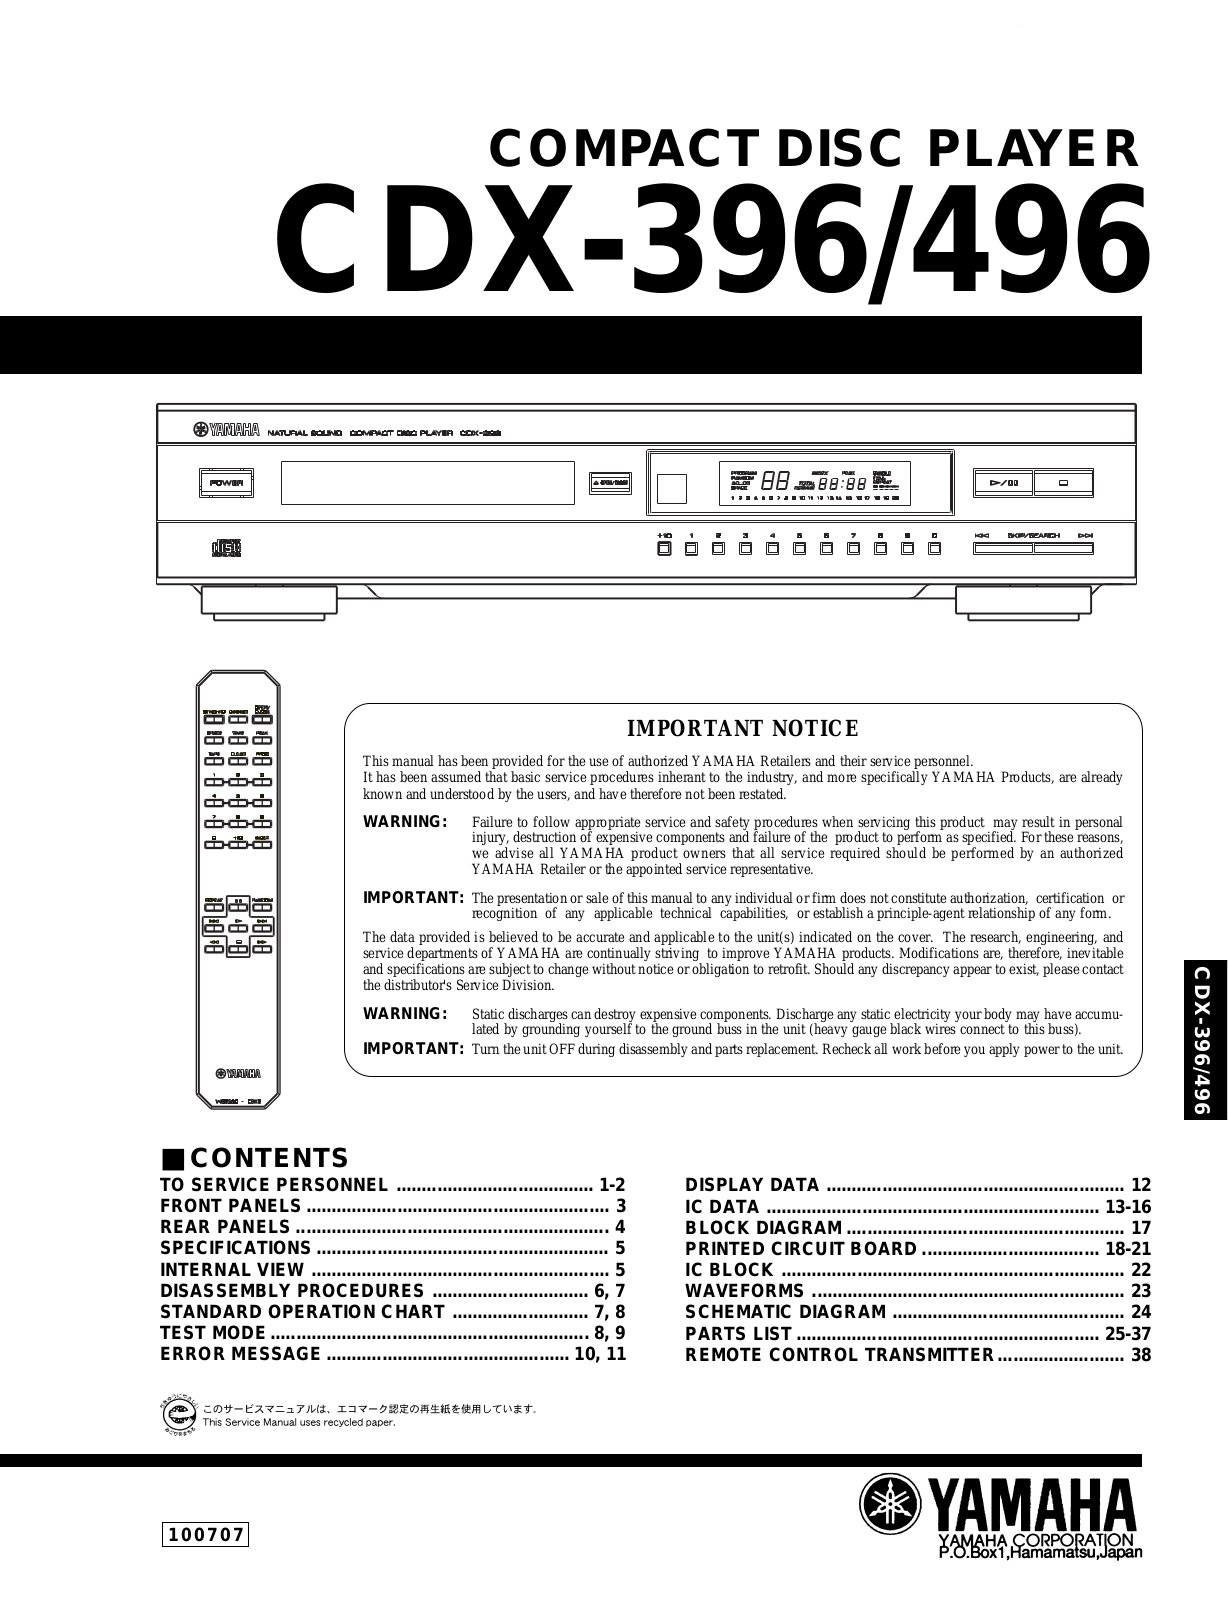 Yamaha CDX-396, CDX-496 Service manual